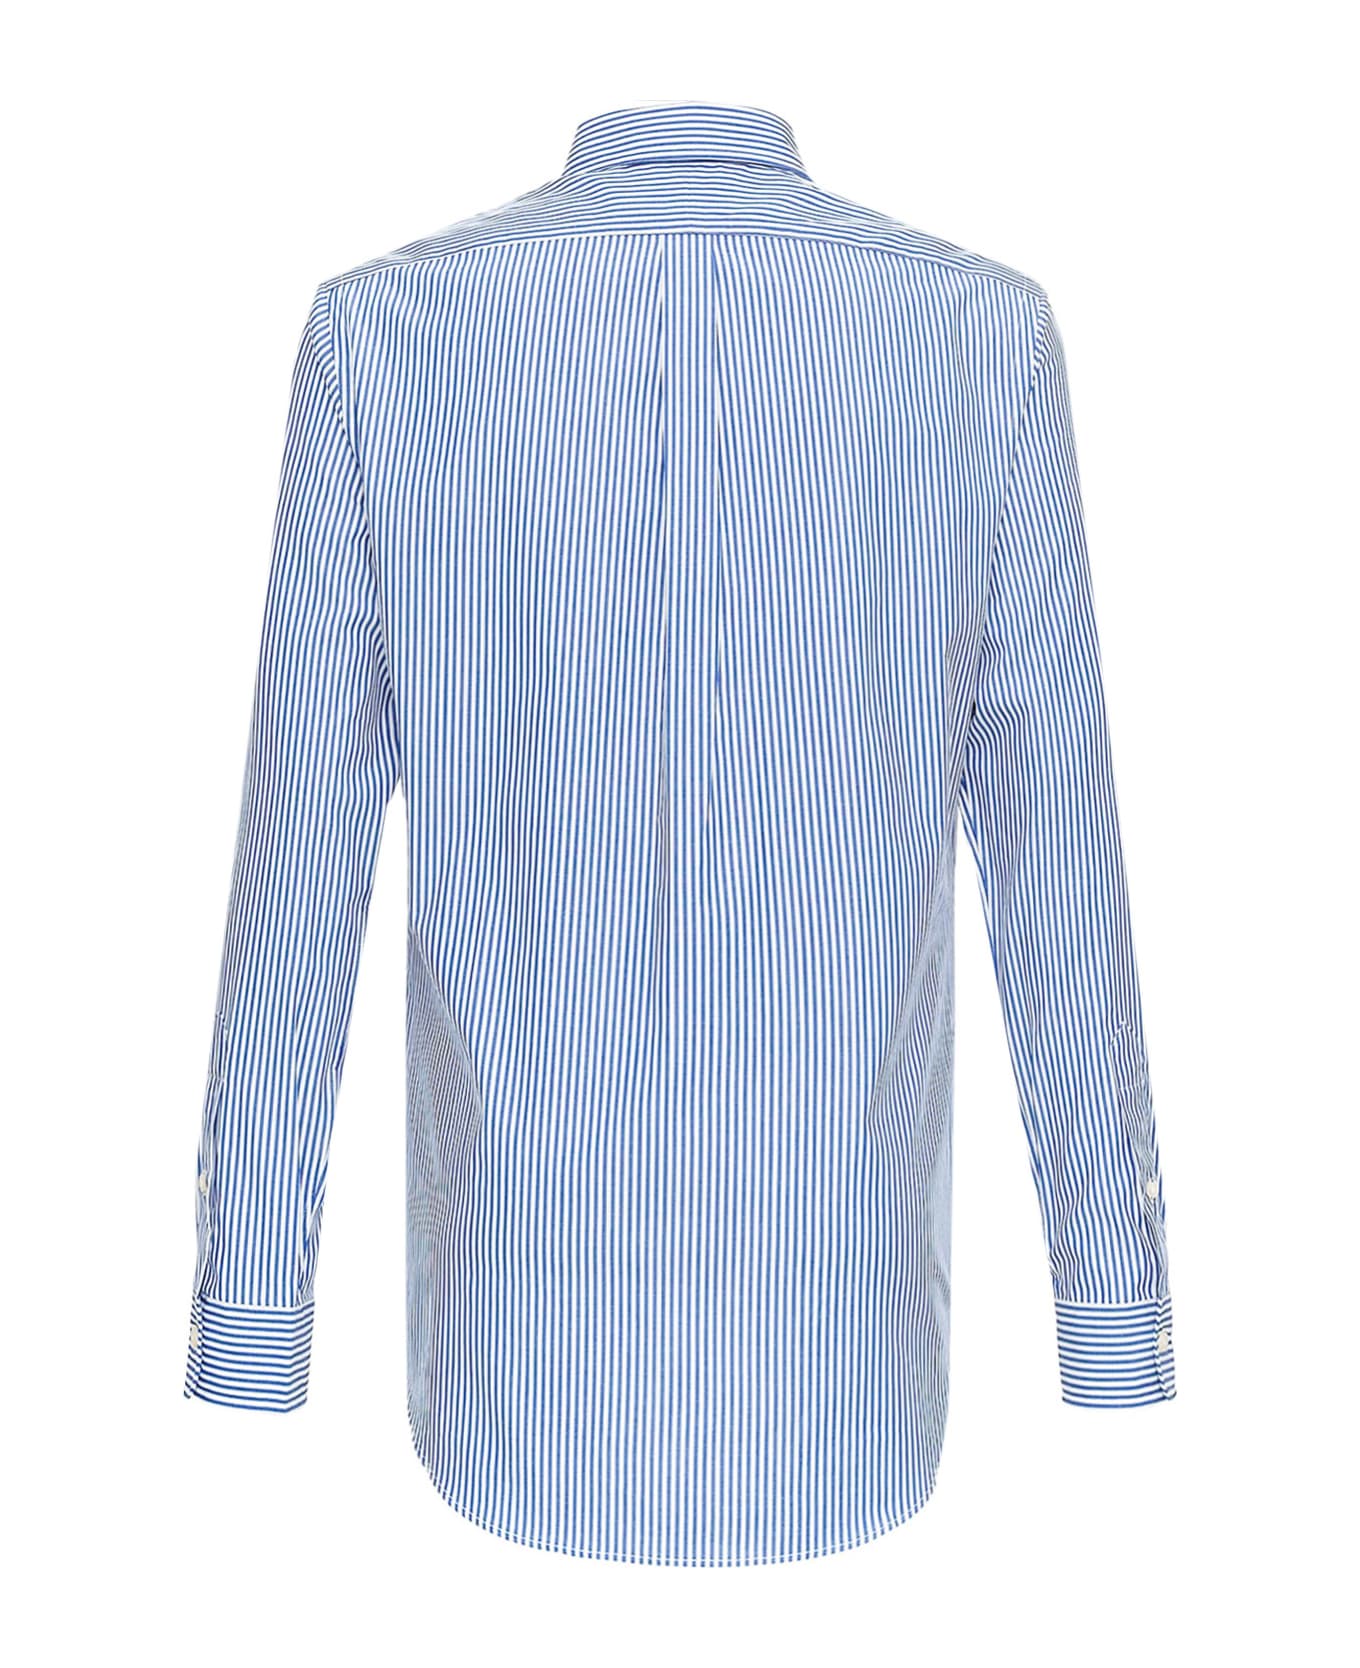 Ralph Lauren Shirt - Blue White Strip